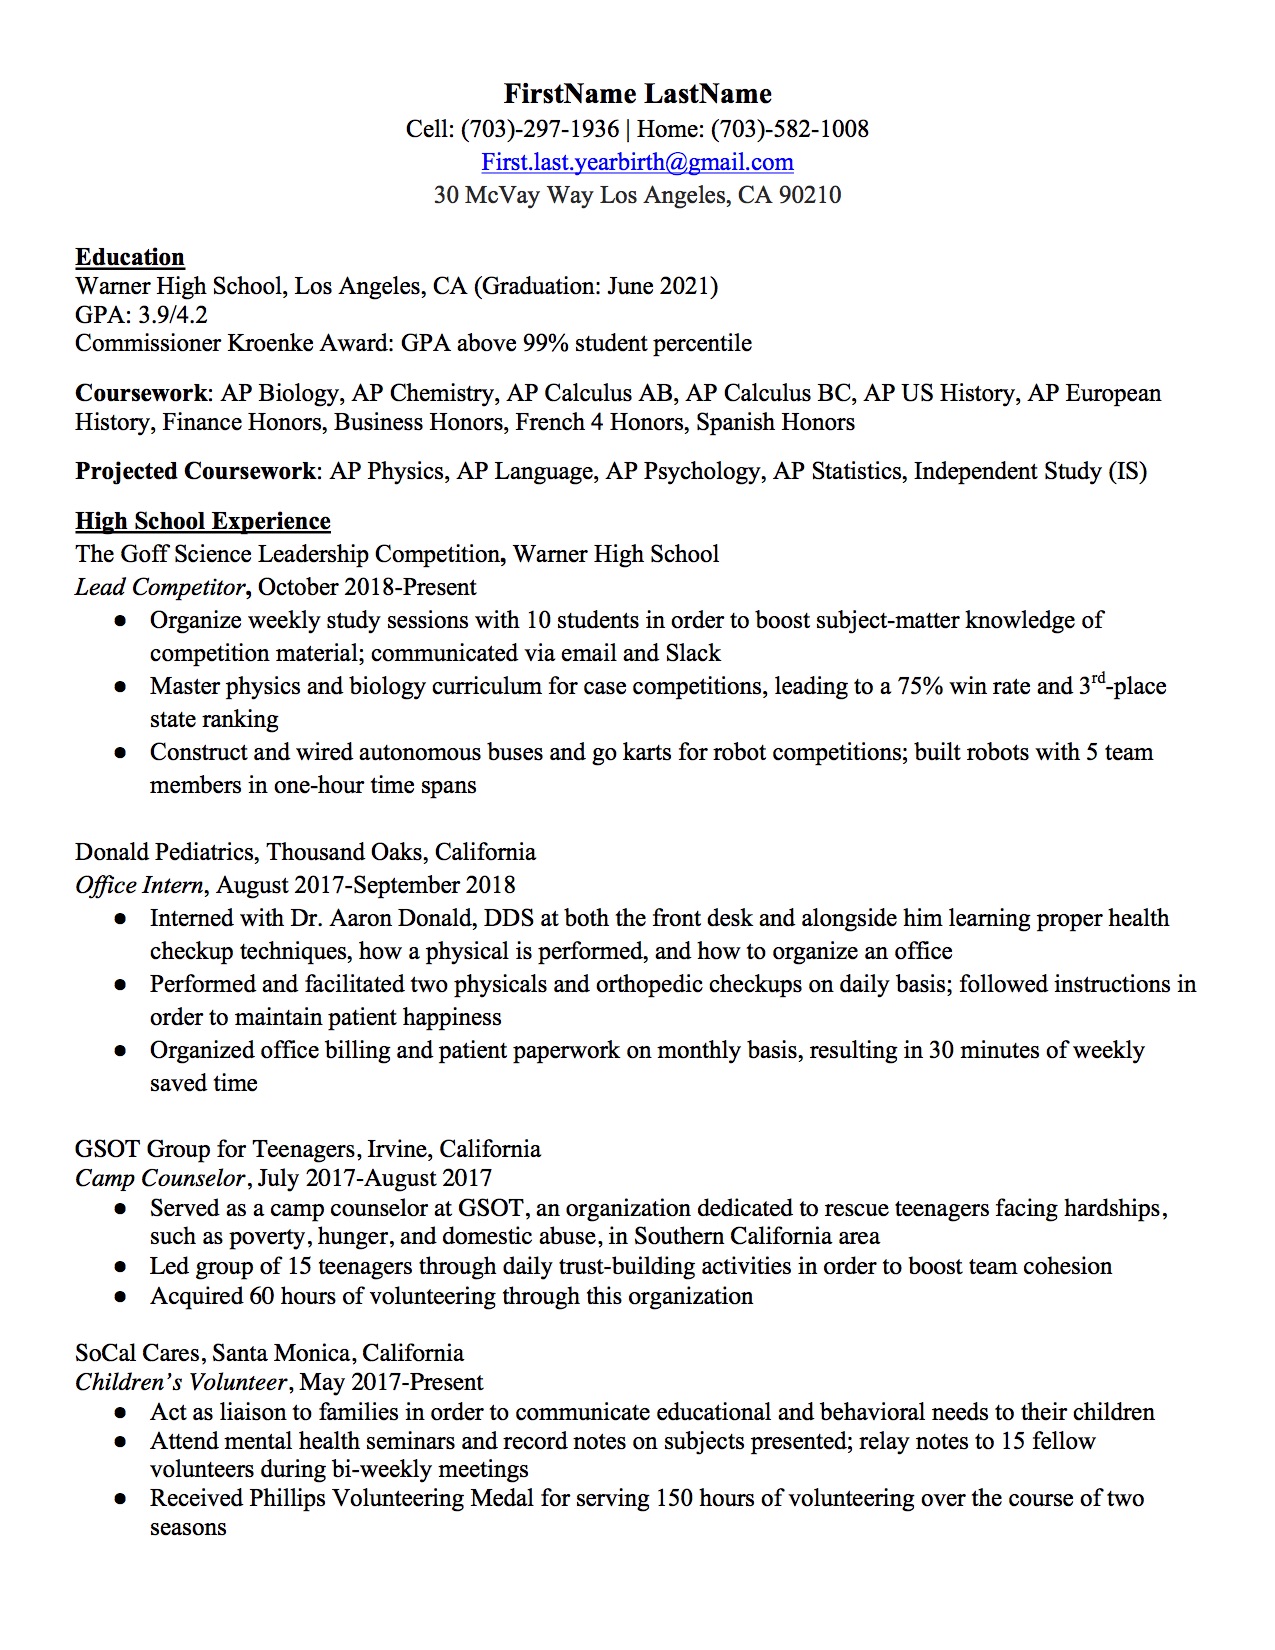 Resume For High School Student High School Resume Template resume for high school student|wikiresume.com